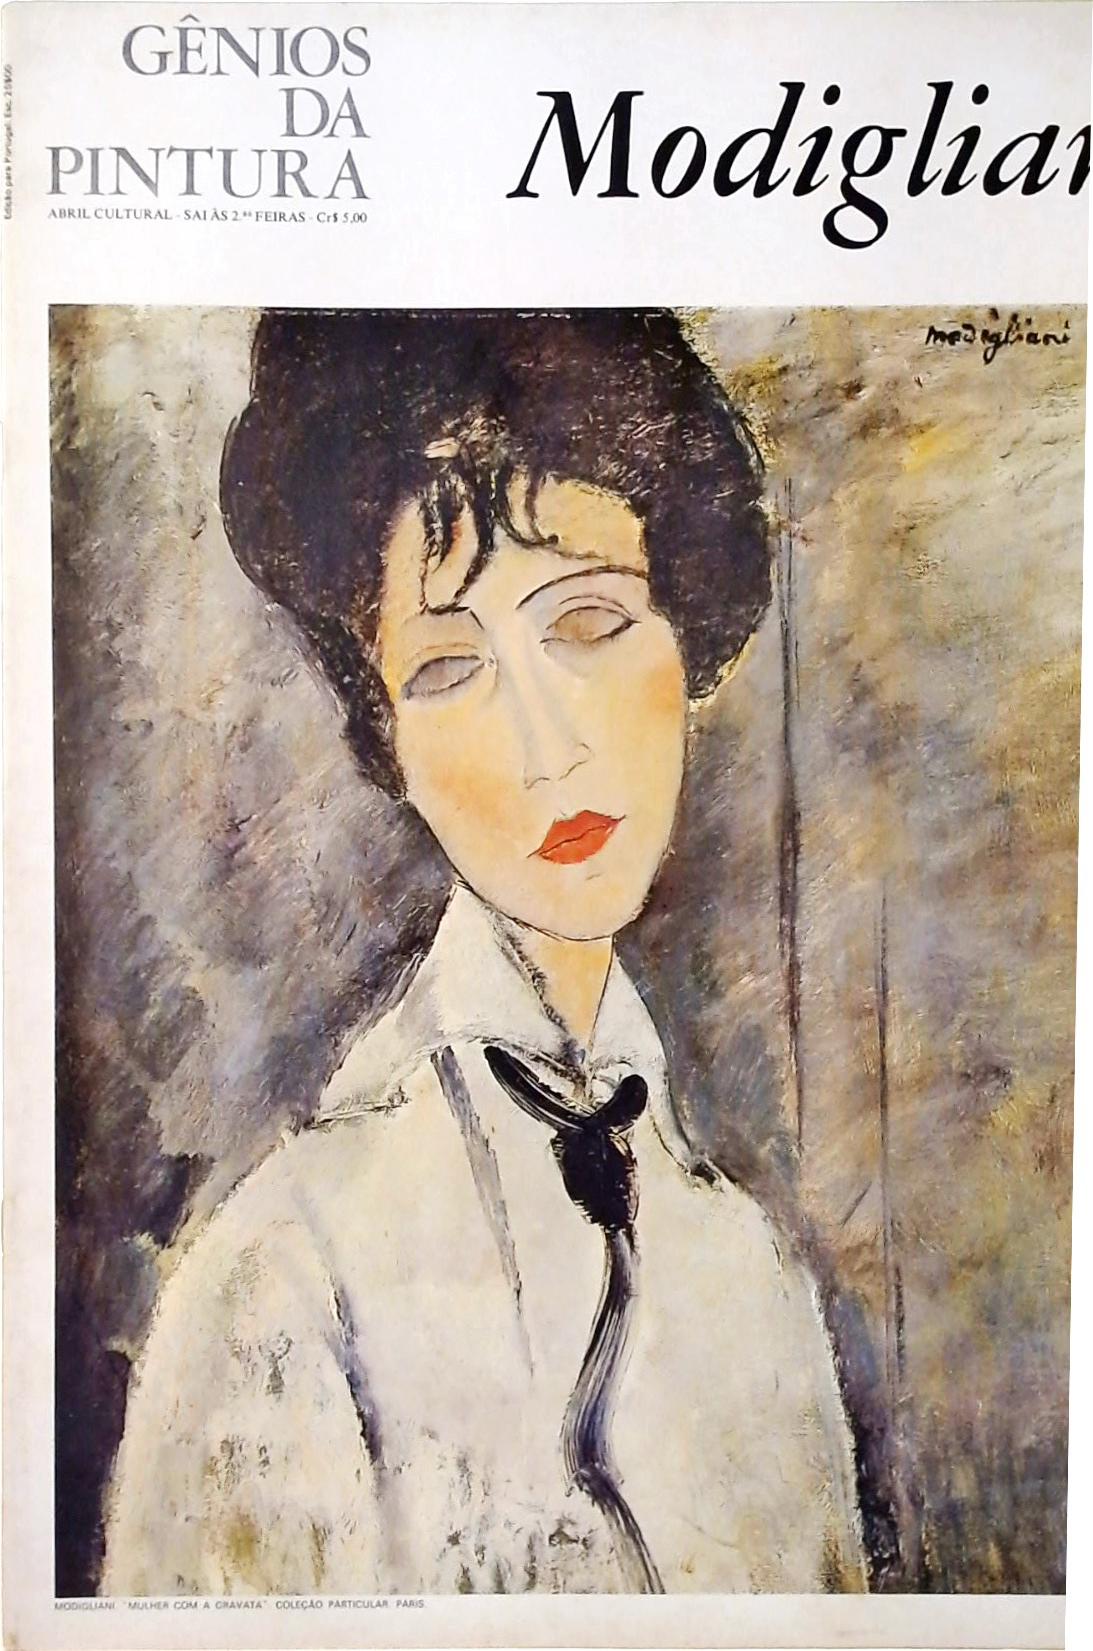 Gênios da Pintura - Modigliani